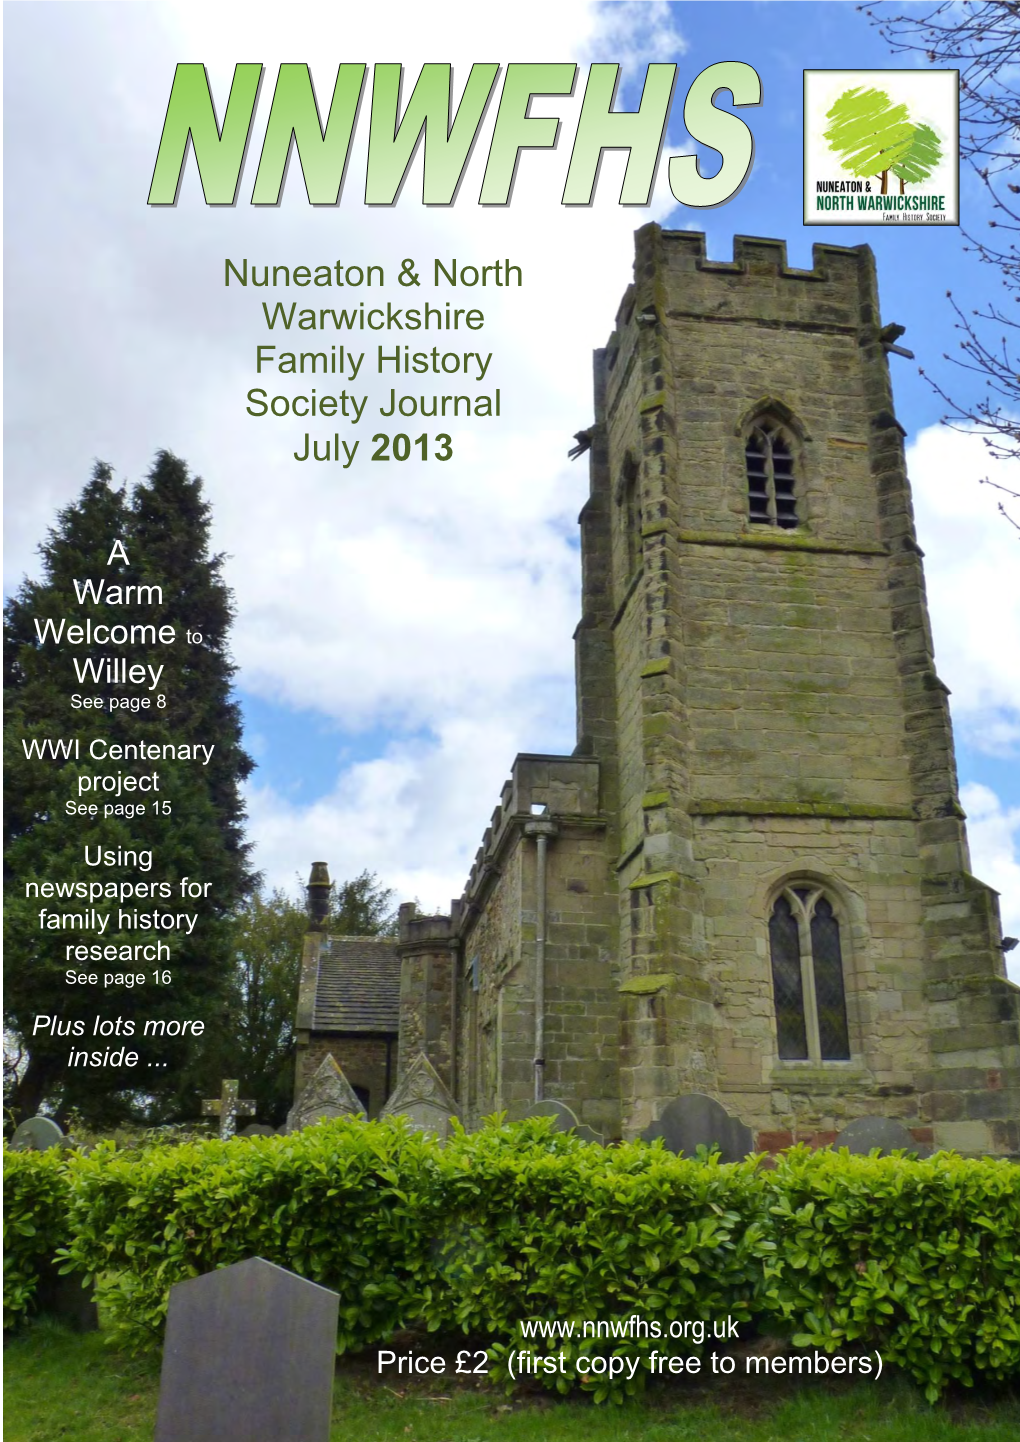 Nuneaton & North Warwickshire Family History Society Journal July